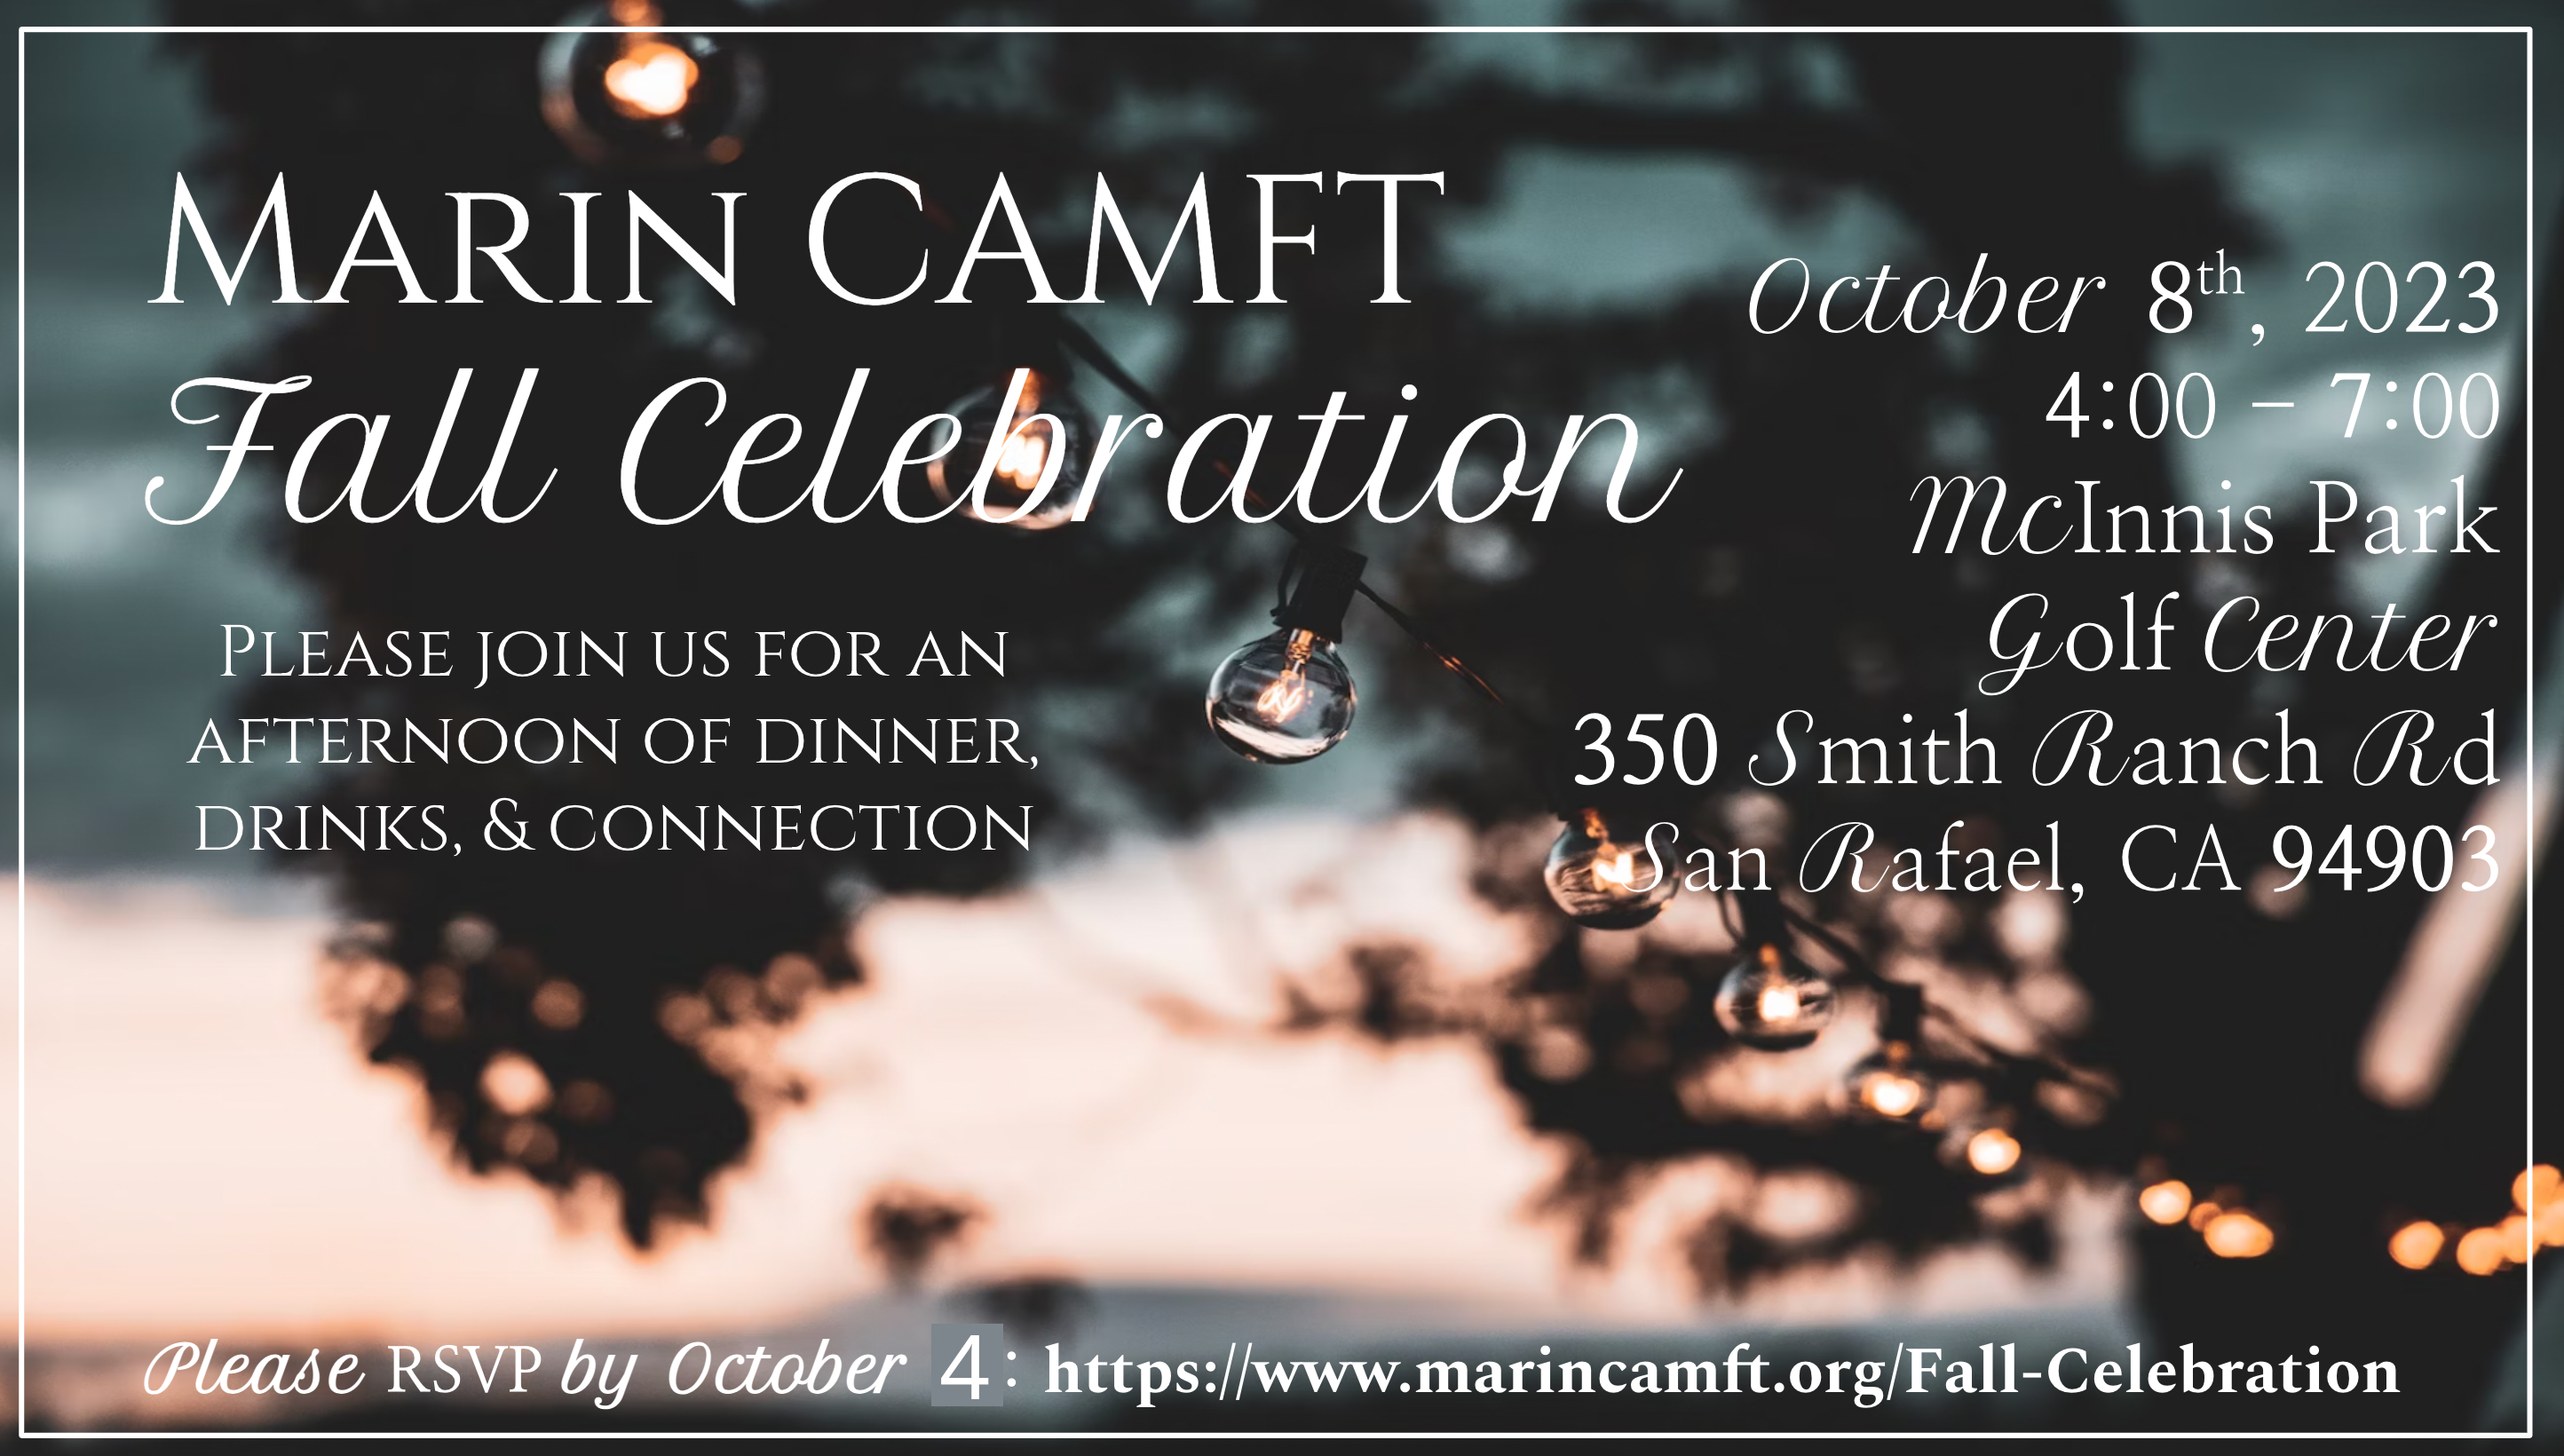 Fall Celebration & Member Meeting - October 8th